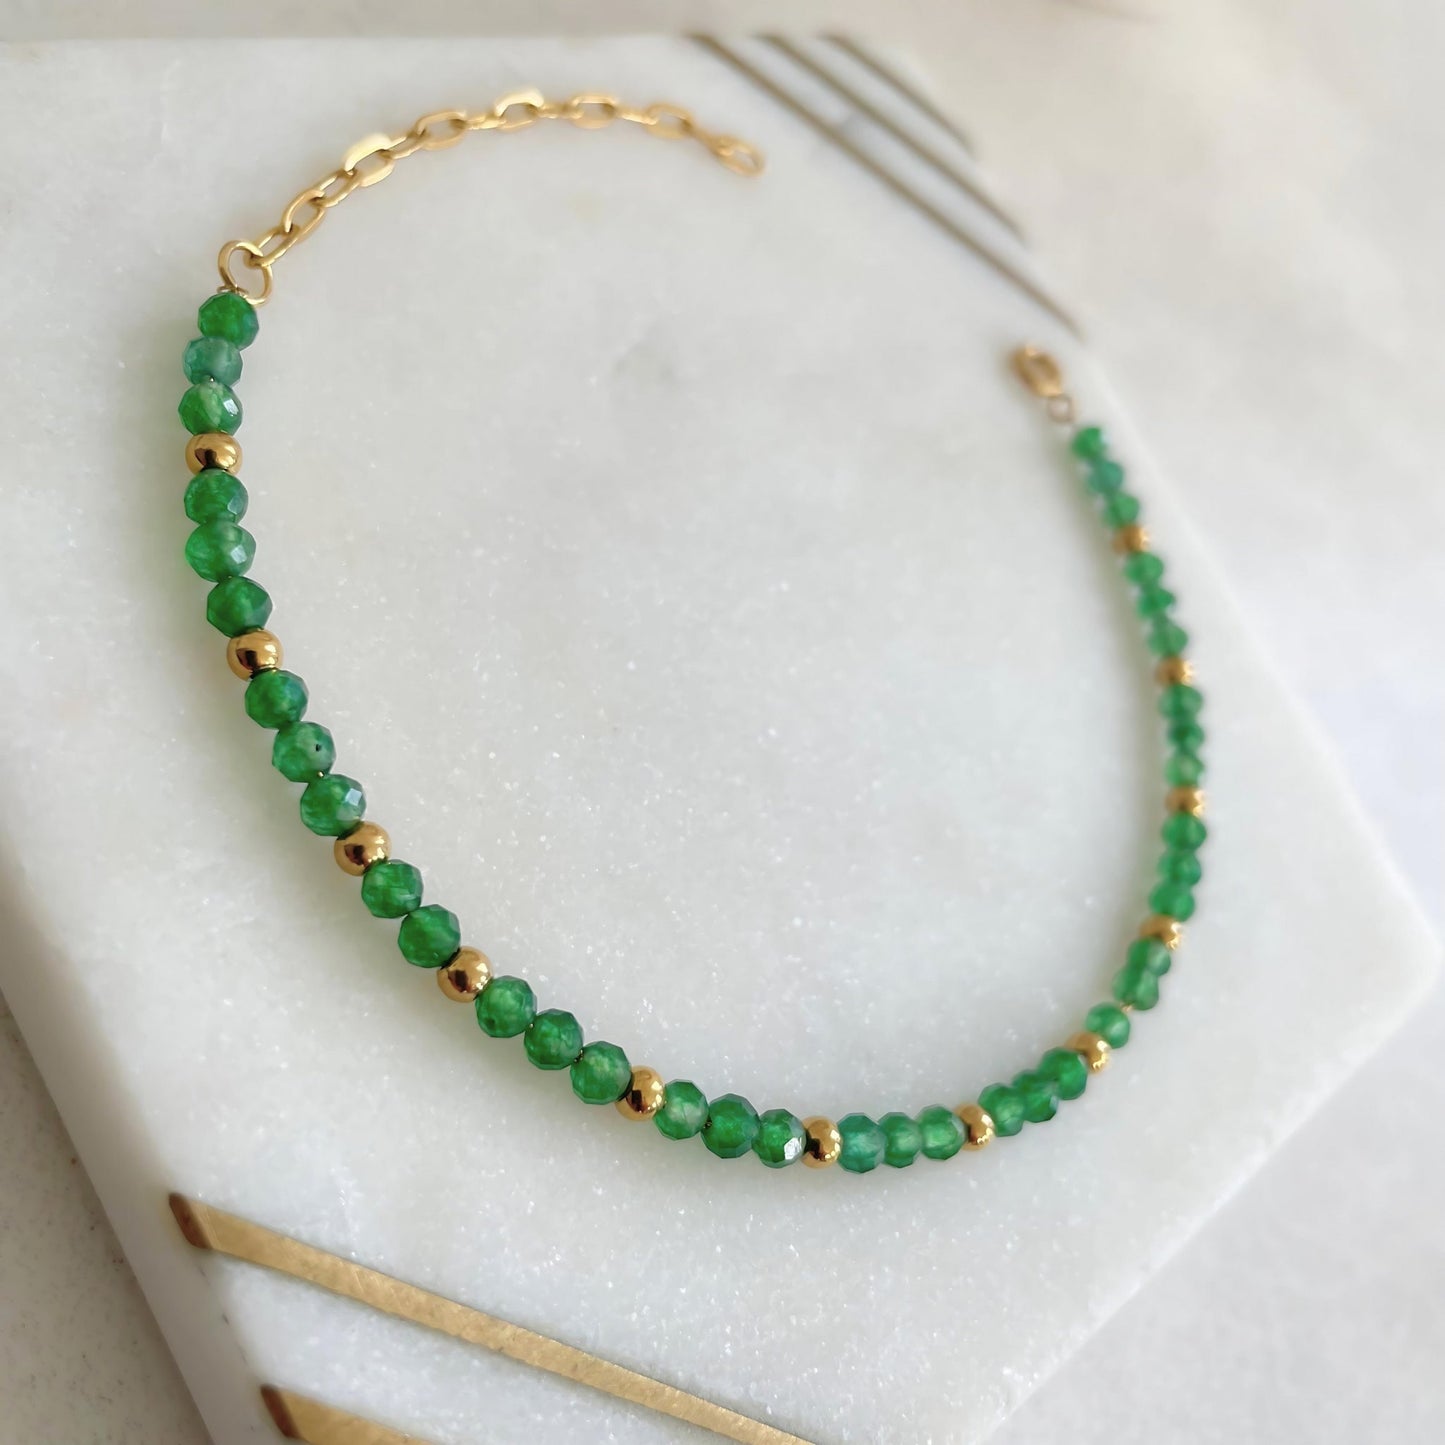 Minimalist Green Emerald Beaded Gold Bracelet - Dainty Bohemian Natural Stone Empowering Bracelet - Boho Layered Positive Energy Jewellery